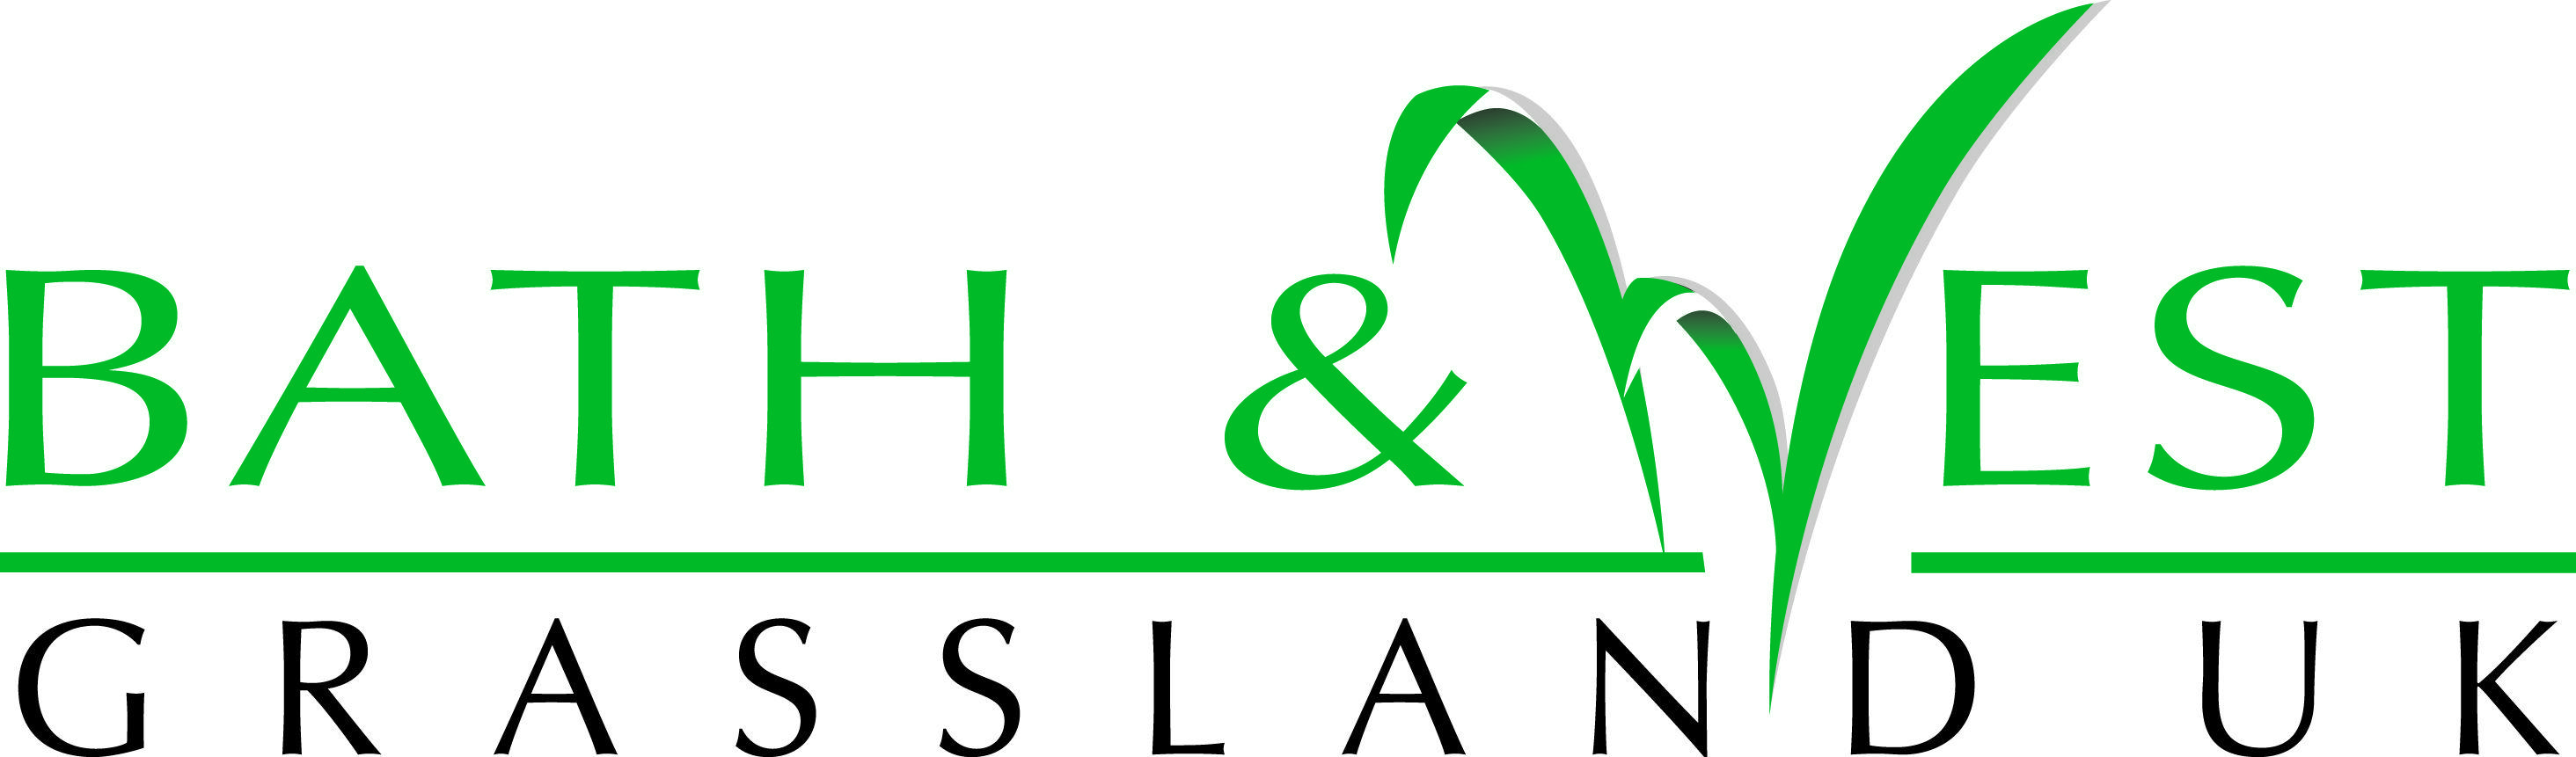 Grassland Logo - Grassland logo - Agrii - Connecting Agri-science with farming